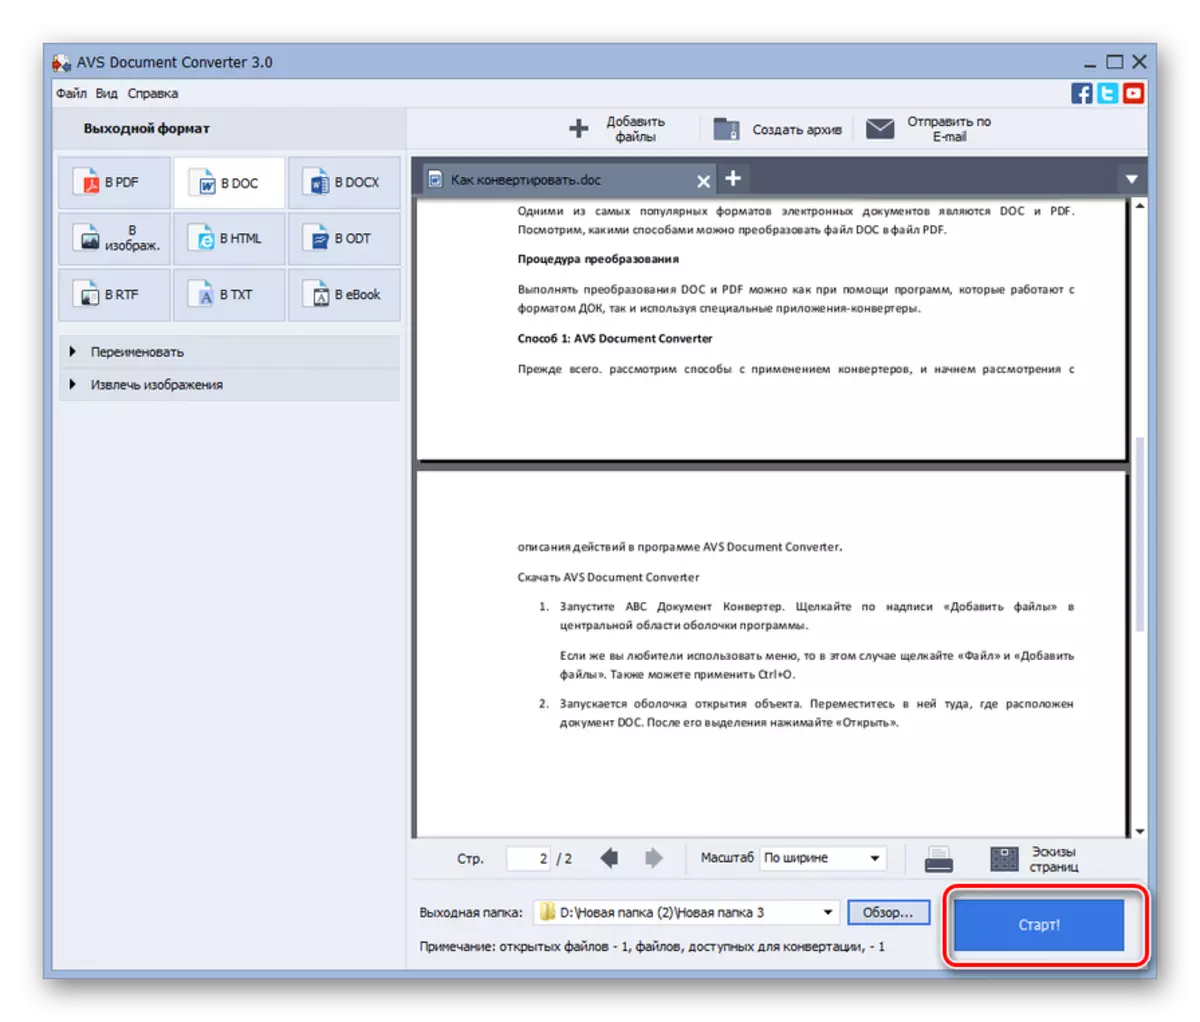 Executando un procedemento de conversión de documentos DOCX en formato doc no programa de conversión de documentos AVS